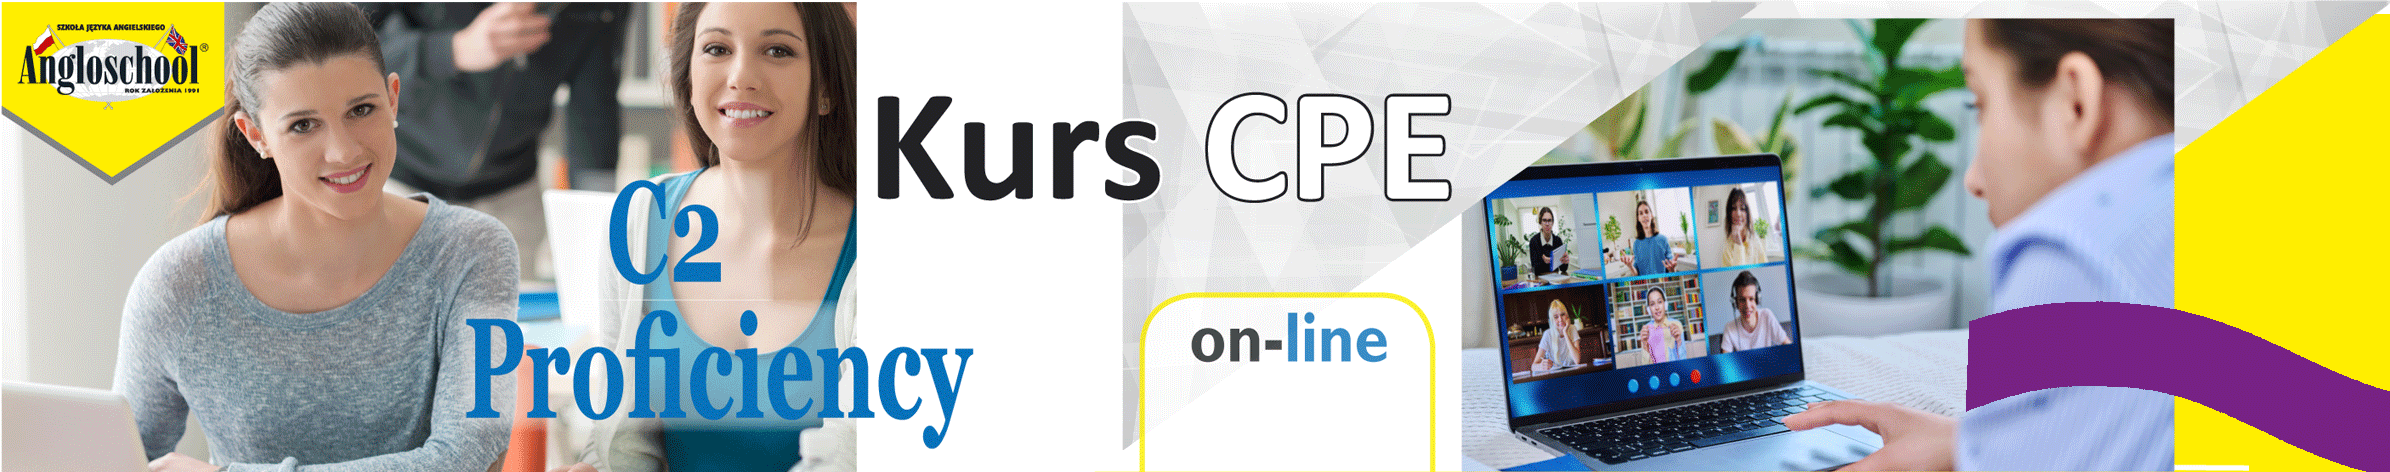 Kurs C2 Proficiency Online (CPE)